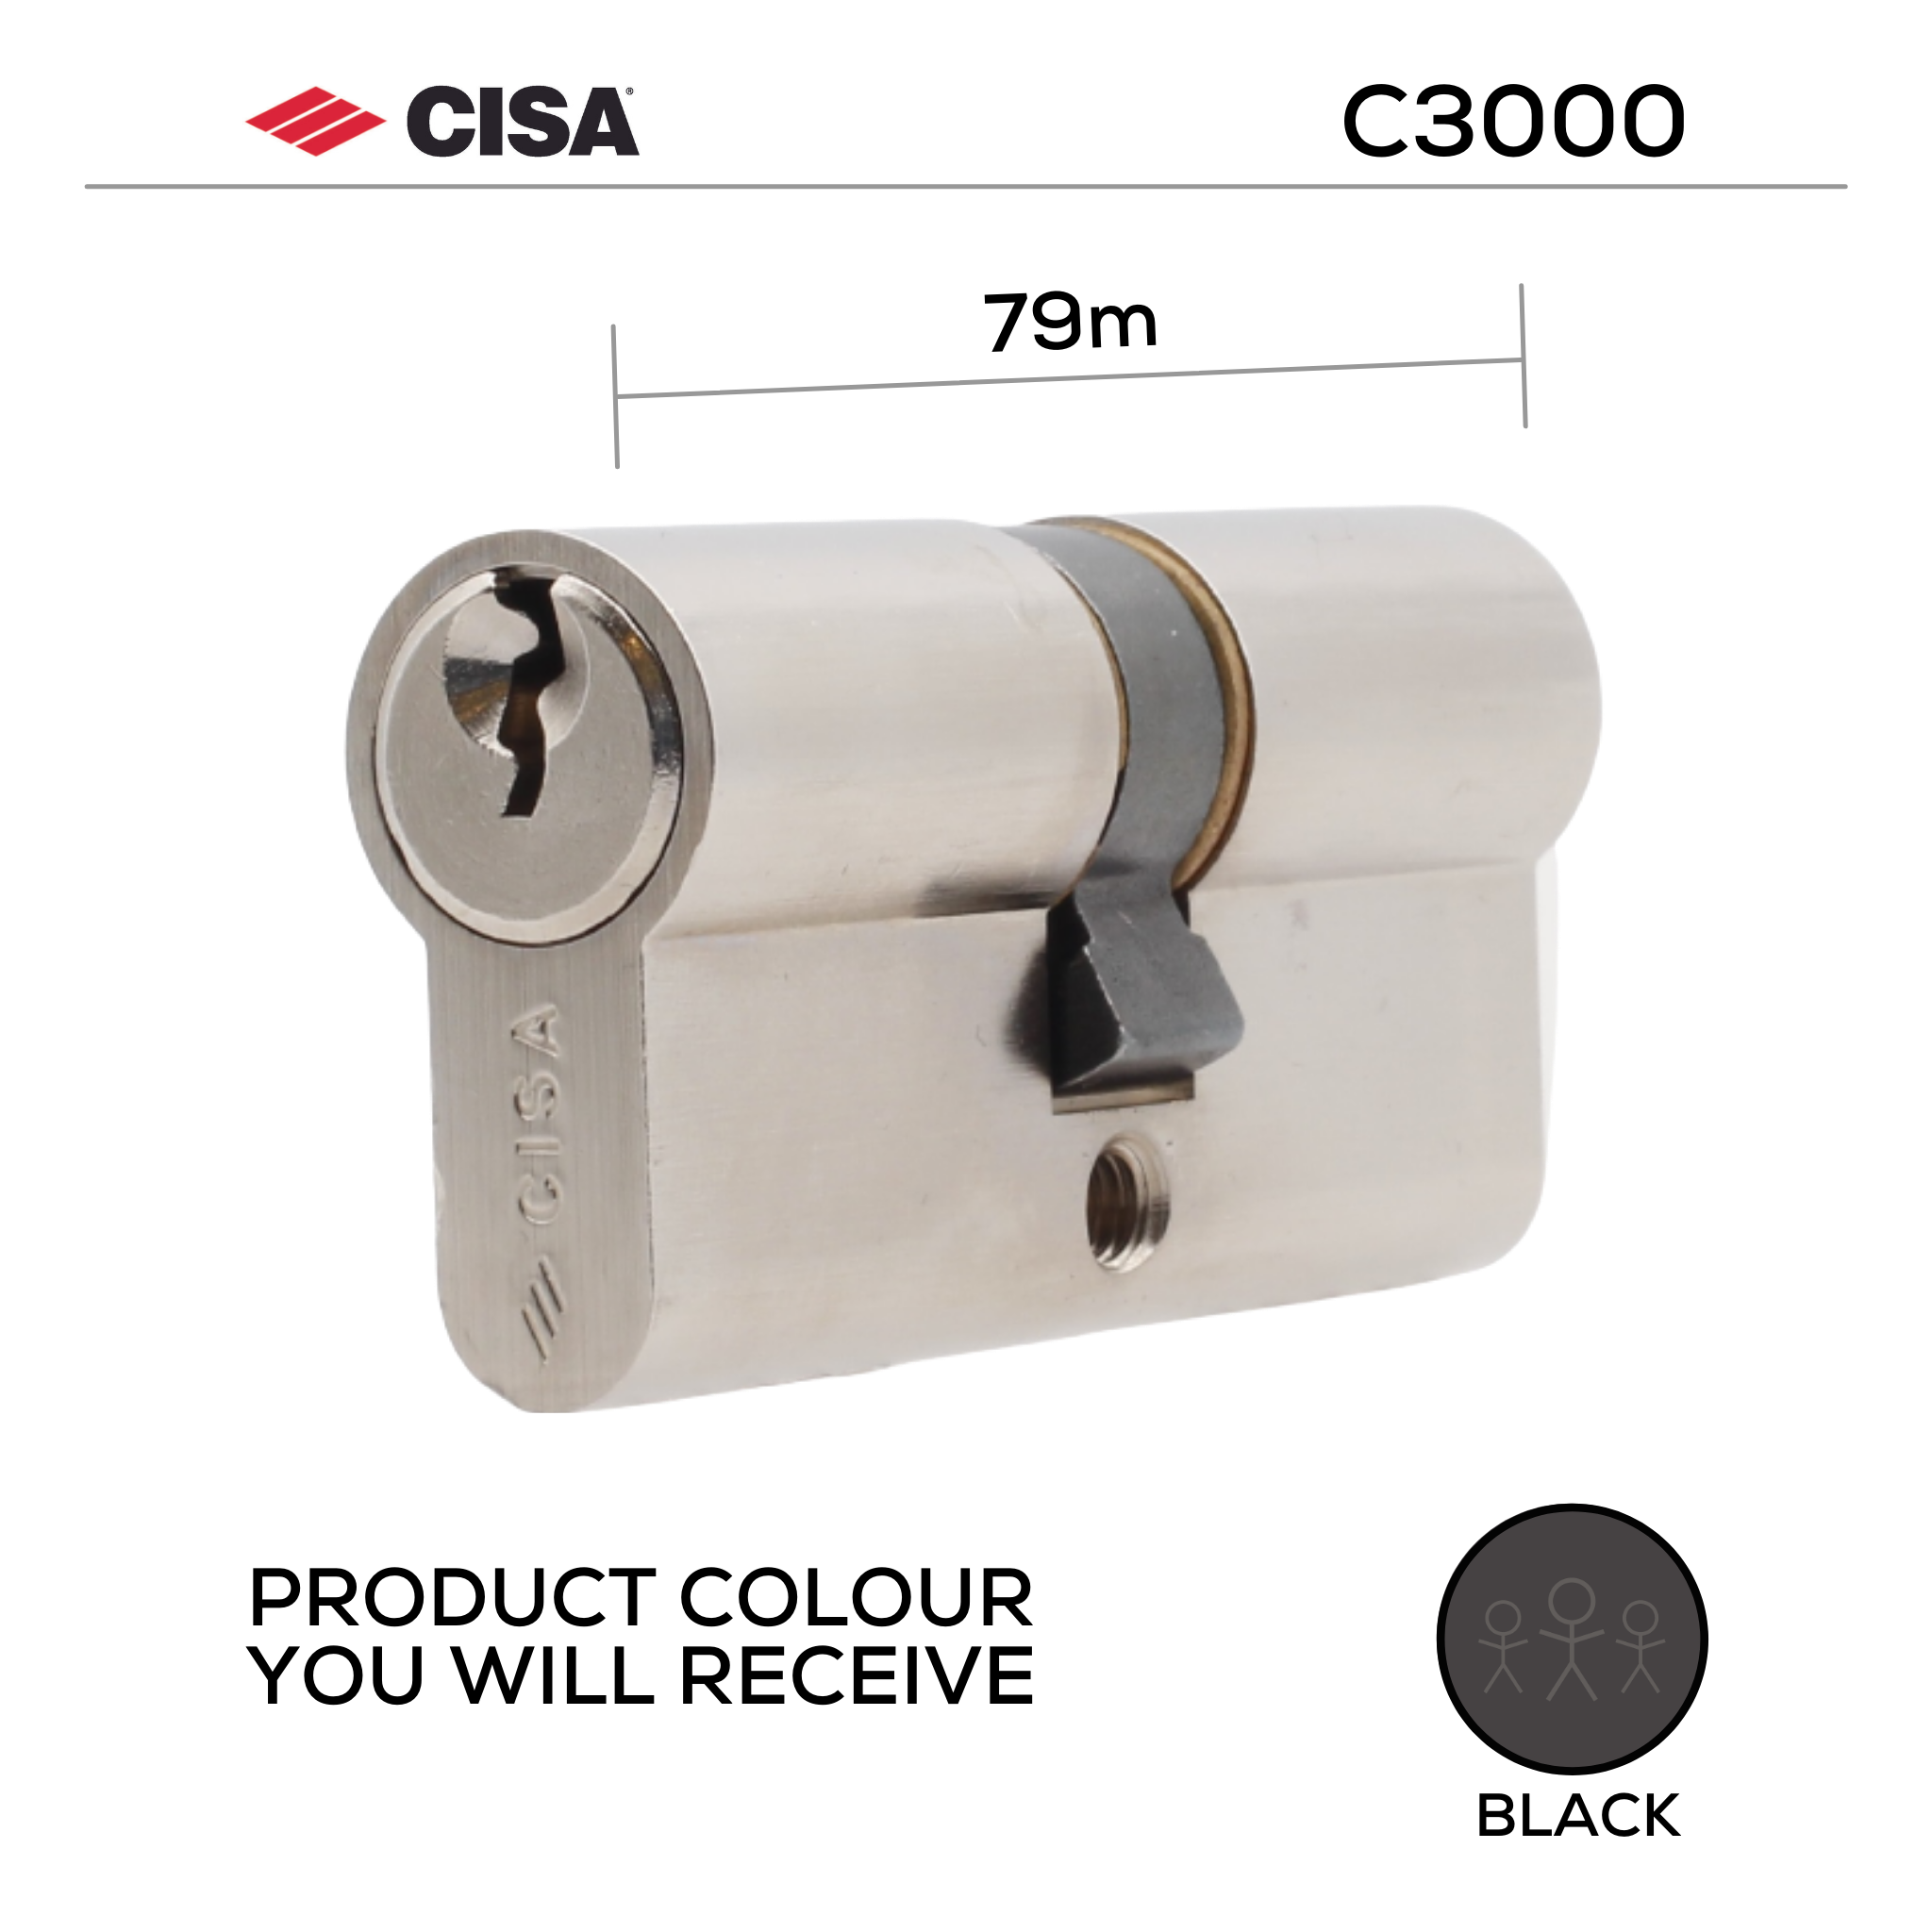 0N310-18-00-BLK-KD, 79mm - 39.5/39.5, Double Cylinder, C3000, Key to Key, Keyed to Differ (Standard), 3 Keys, 6 Pin, Black, CISA